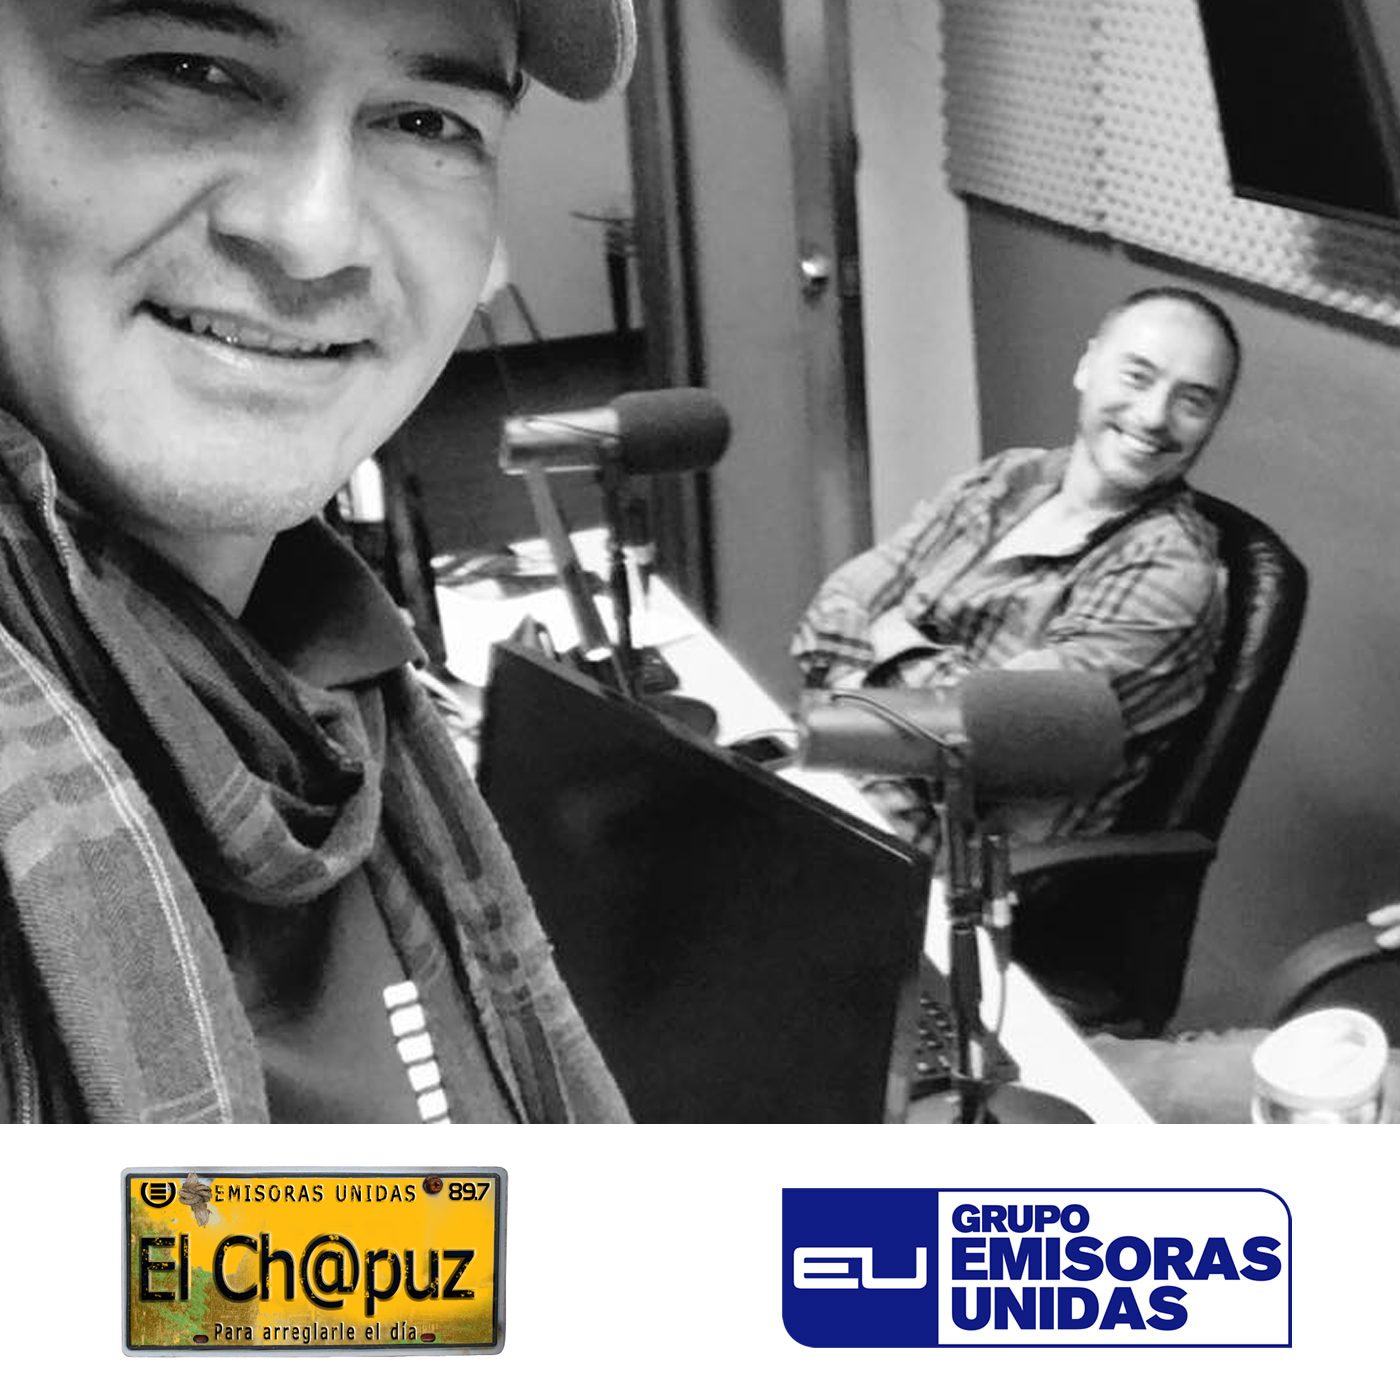 EC11 - El Chapuz - Emisoras unidas - #PlaticasDeCompañerosDeCuarto